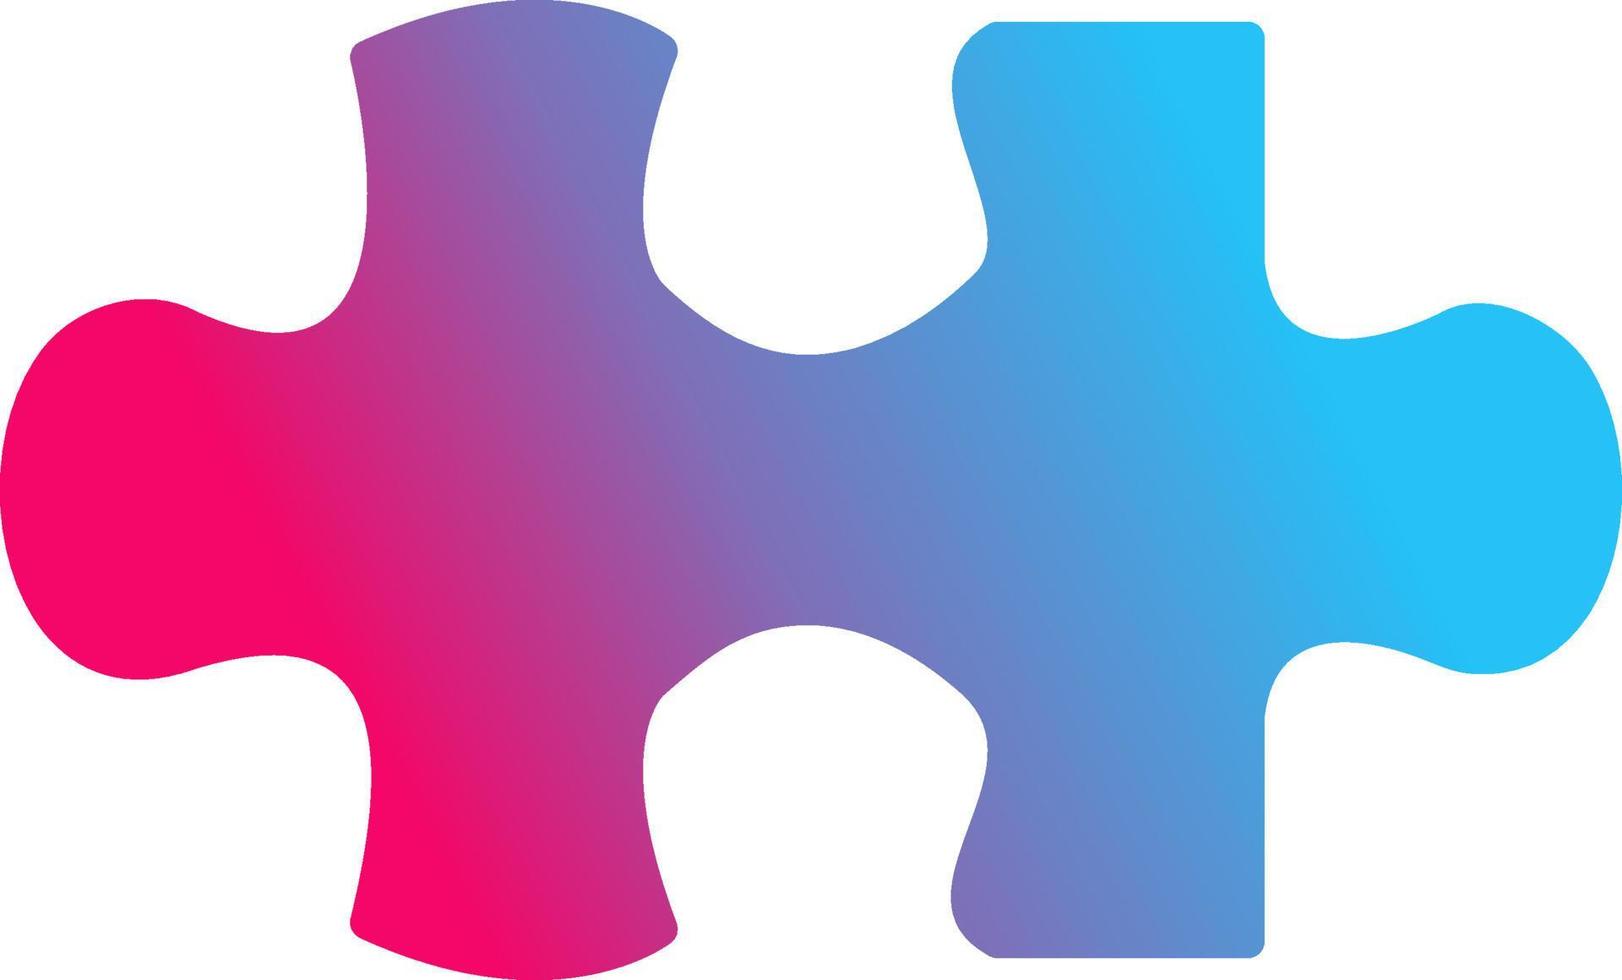 unico puzzle pezzo vettore icona